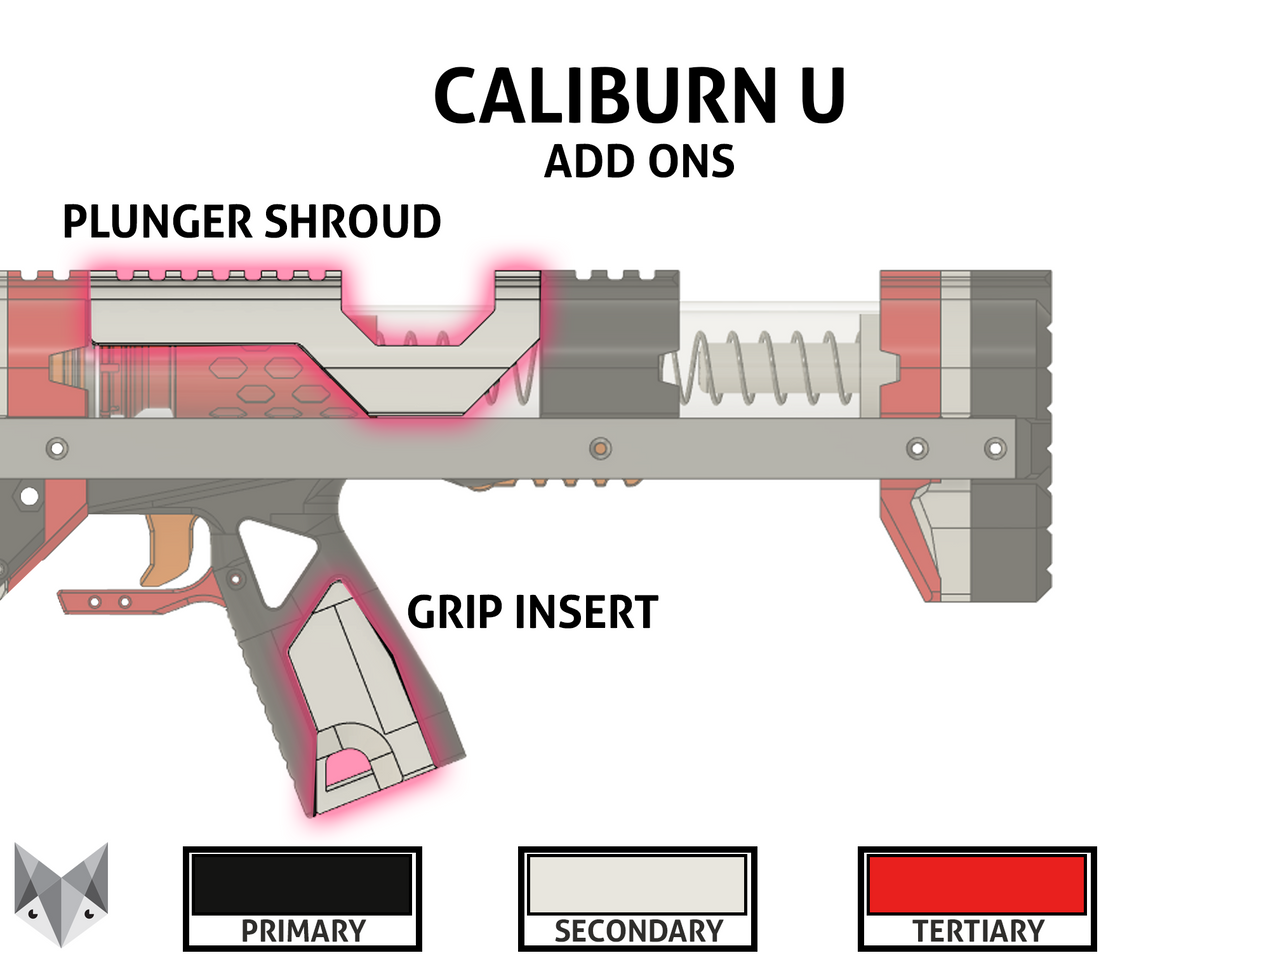 Caliburn U - Mega